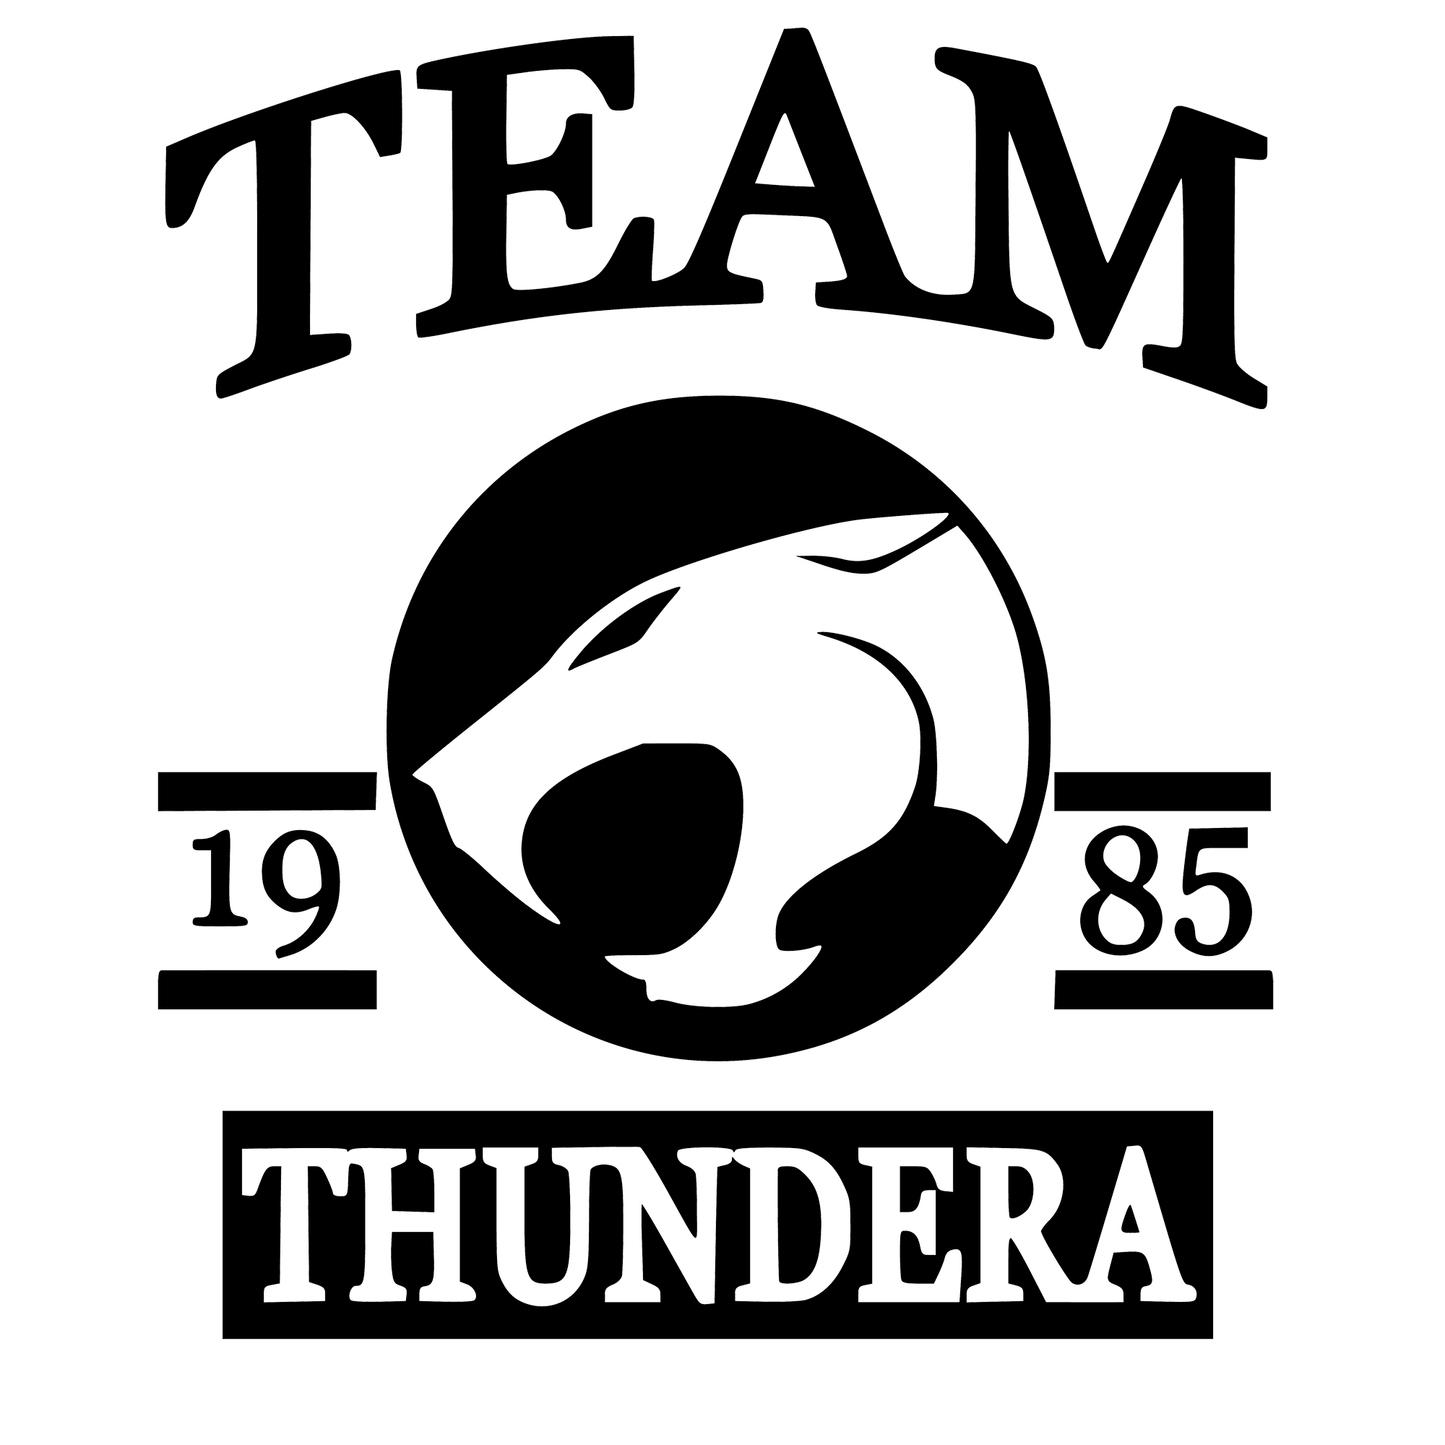 Thundercats Team Thundara Vinyl Decal Sticker